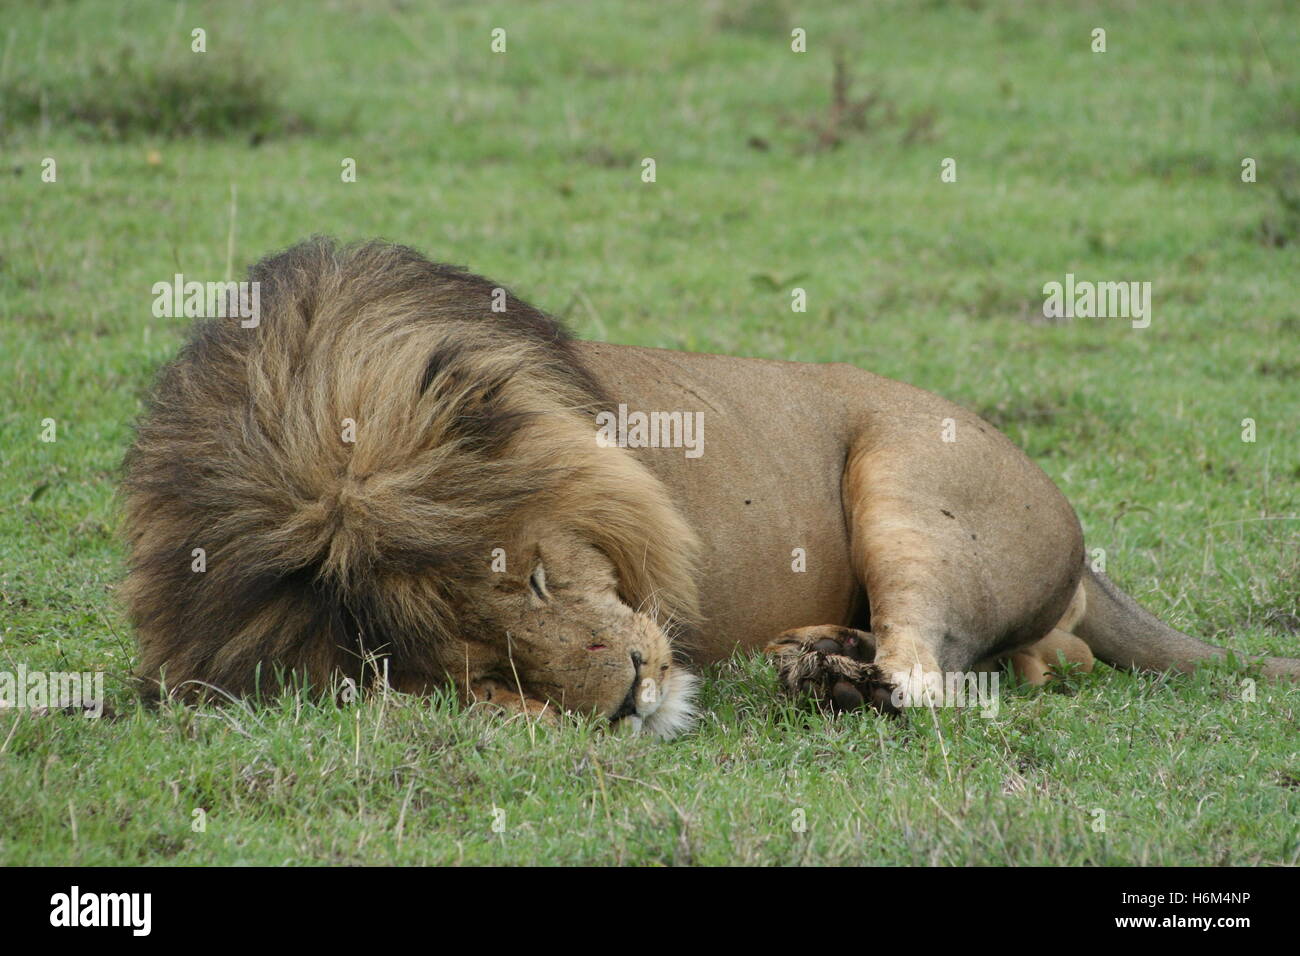 sleeping lion with superb mane Stock Photo